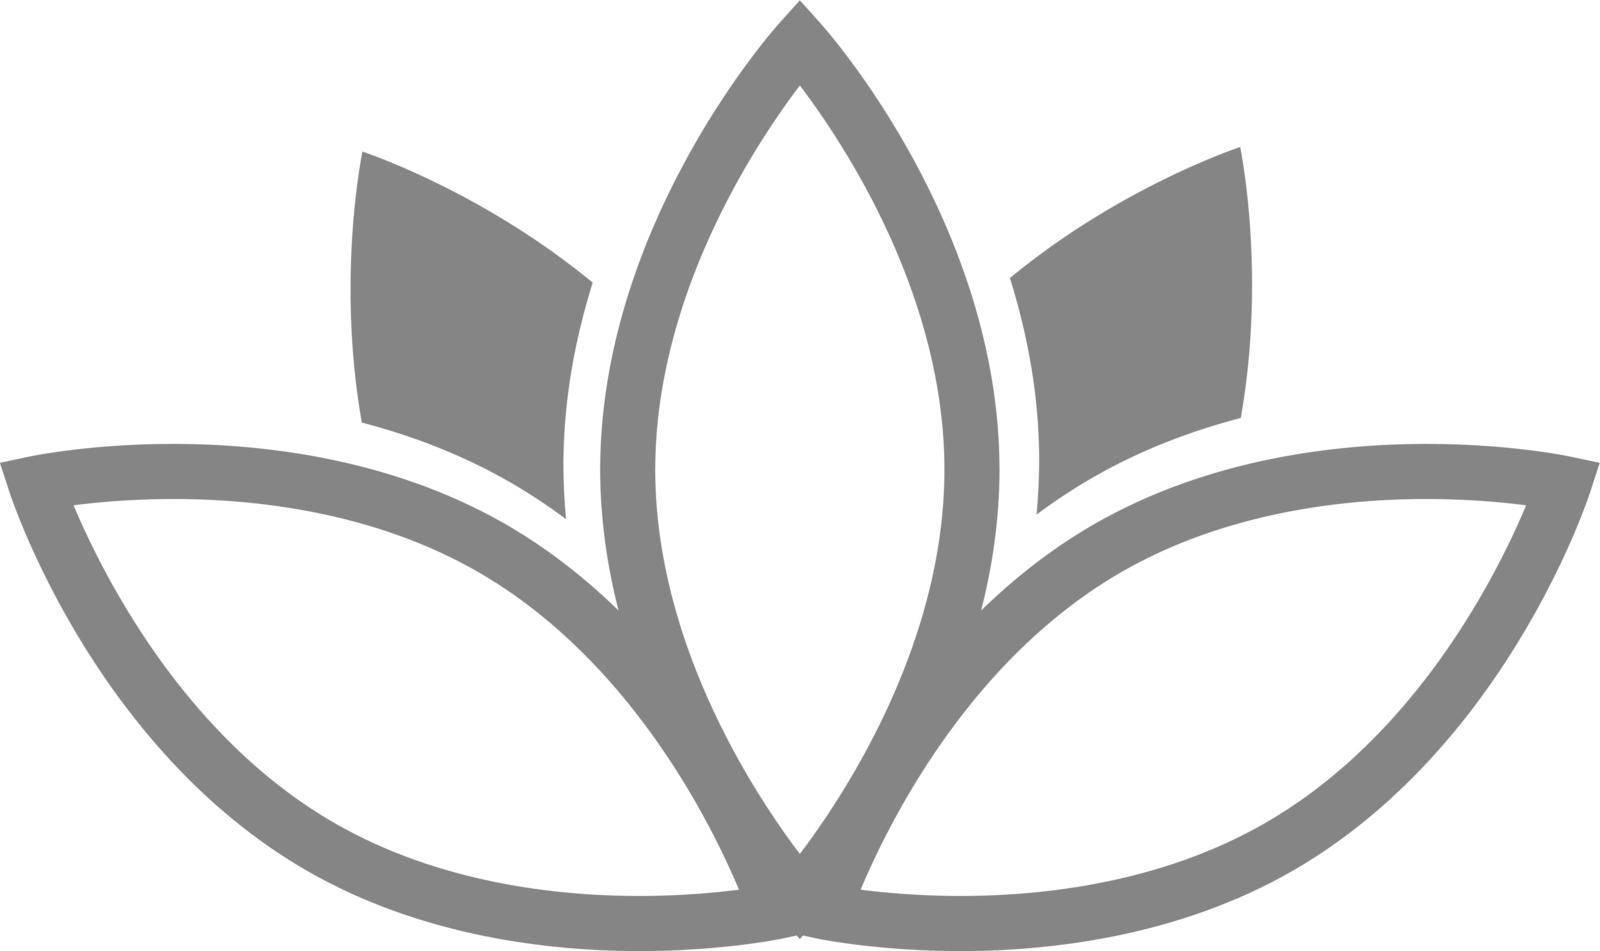 Flower icon. Three petal lotus. Peace symbol isolated on white background